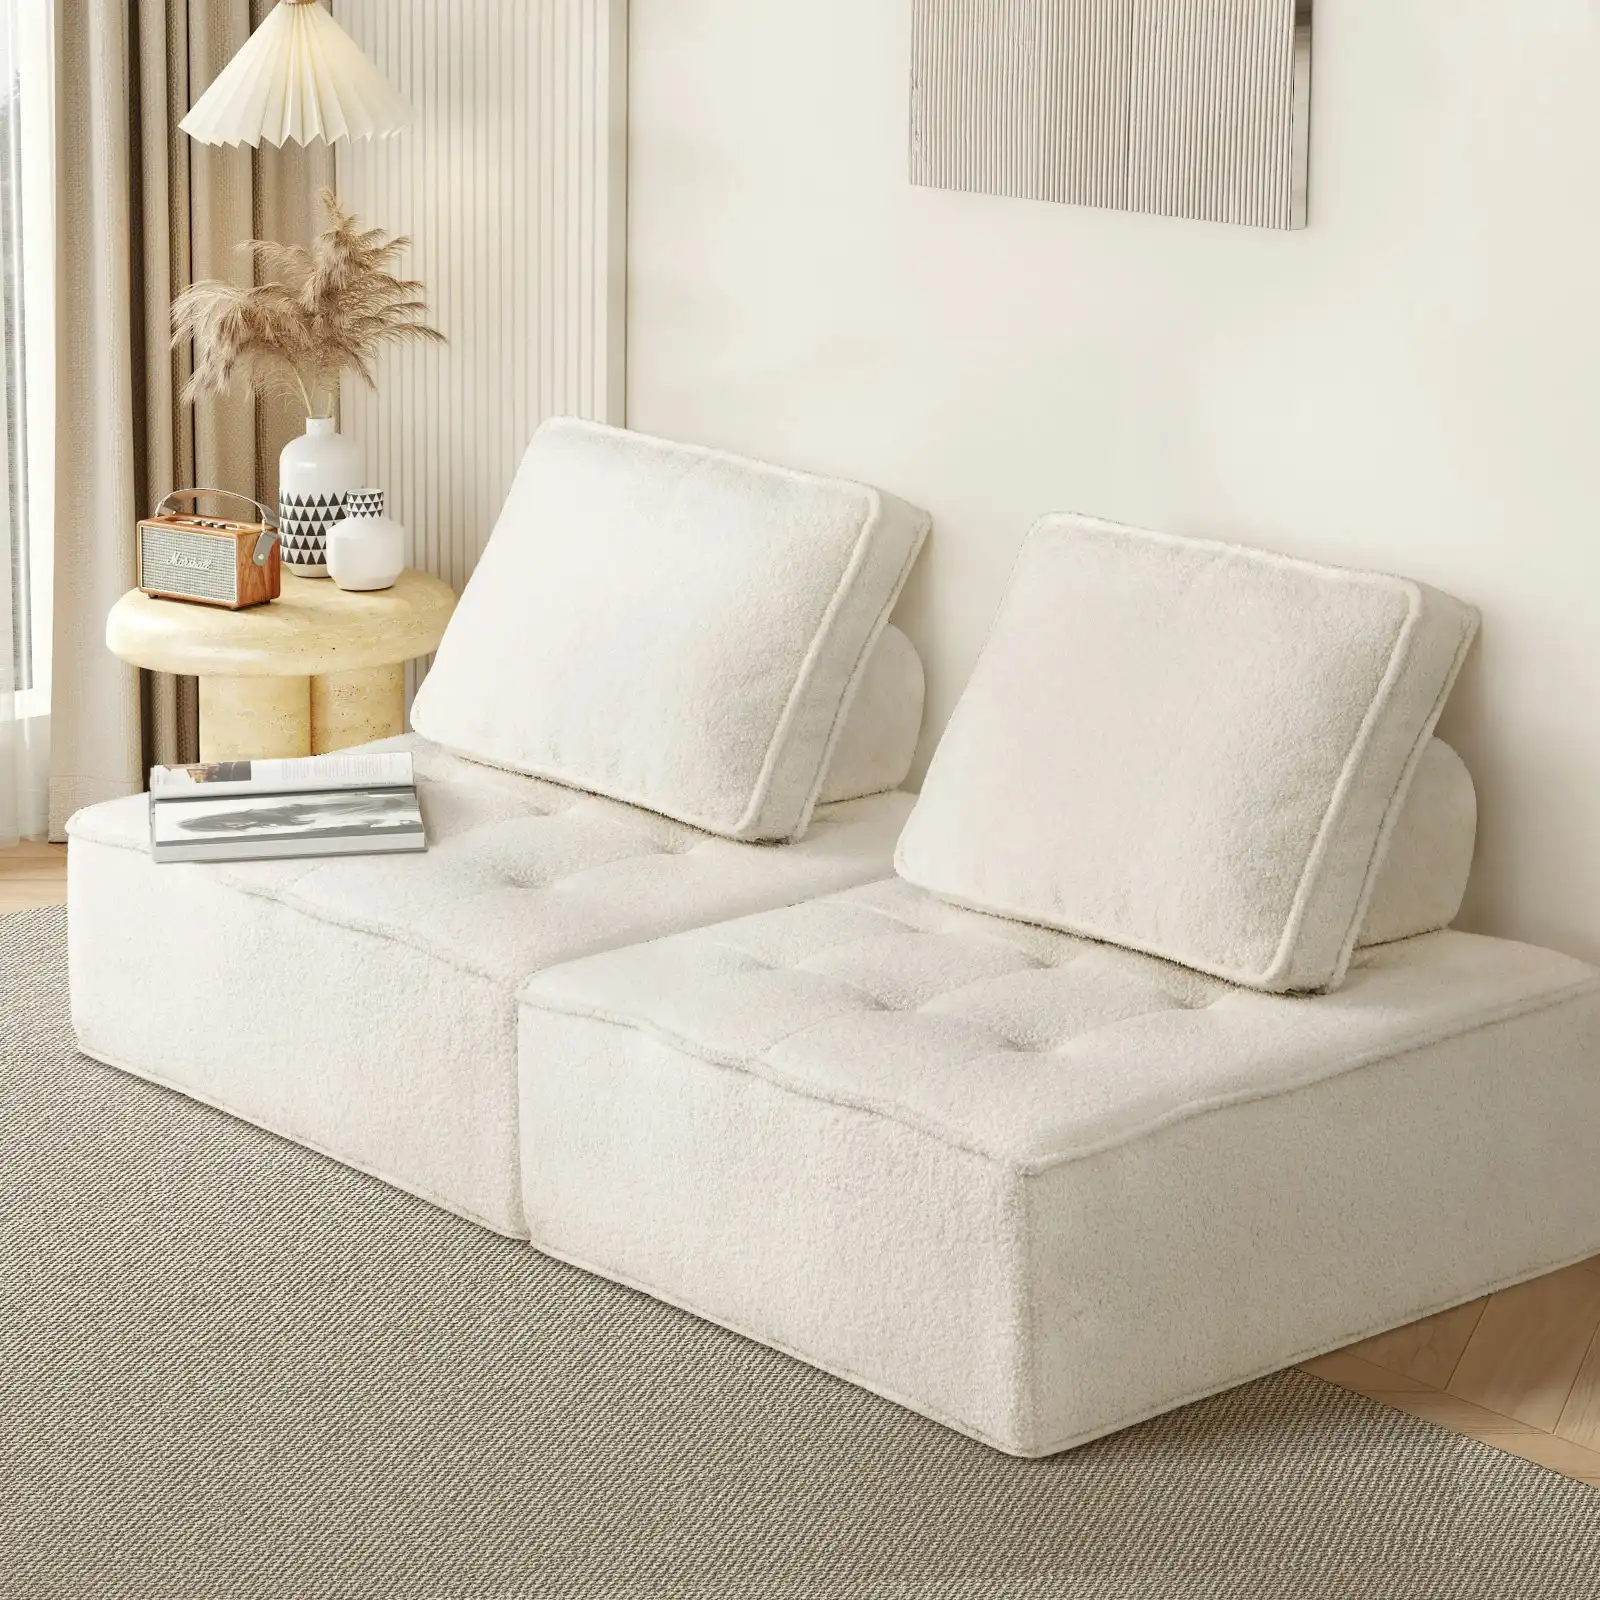 Oikiture 2PCS Modular Sofa Lounge Chair Armless Adjustable Back Sherpa White